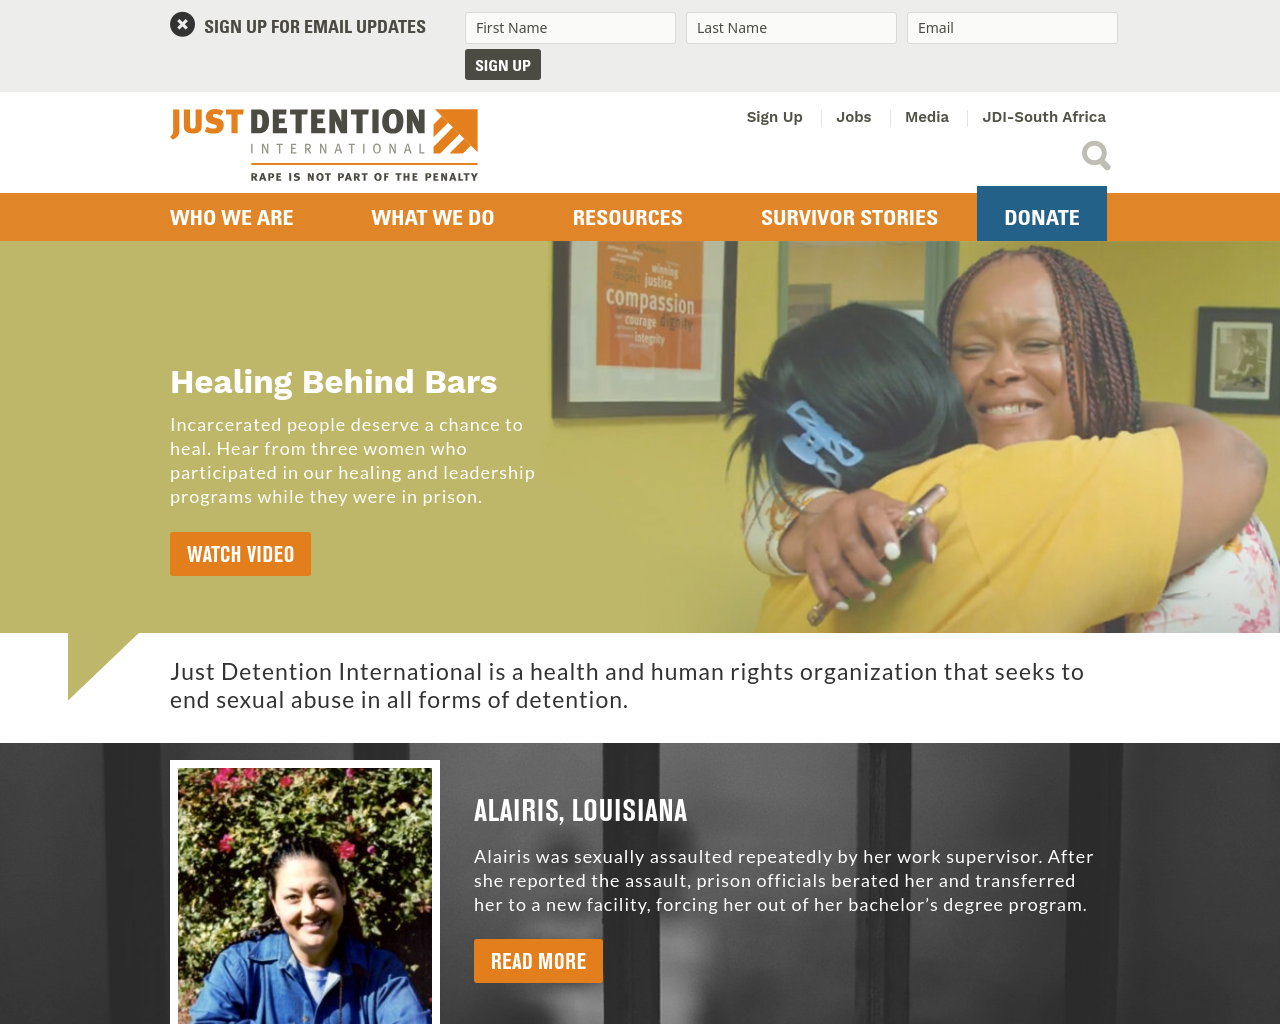 justdetention.org